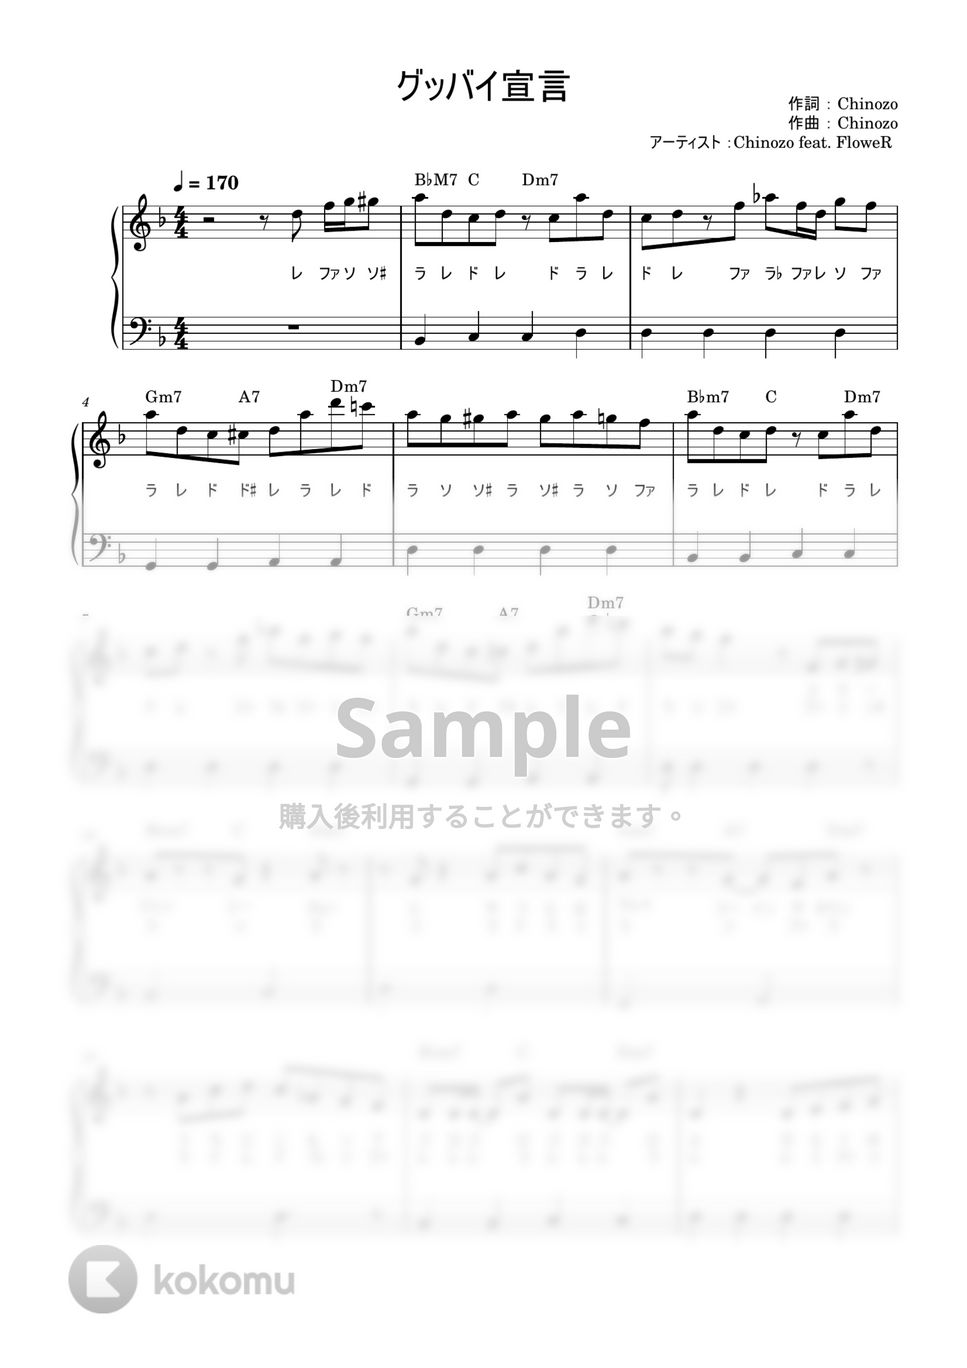 Chinozo feat. FloweR - グッバイ宣言 (かんたん / 歌詞付き / ドレミ付き / 初心者) by piano.tokyo